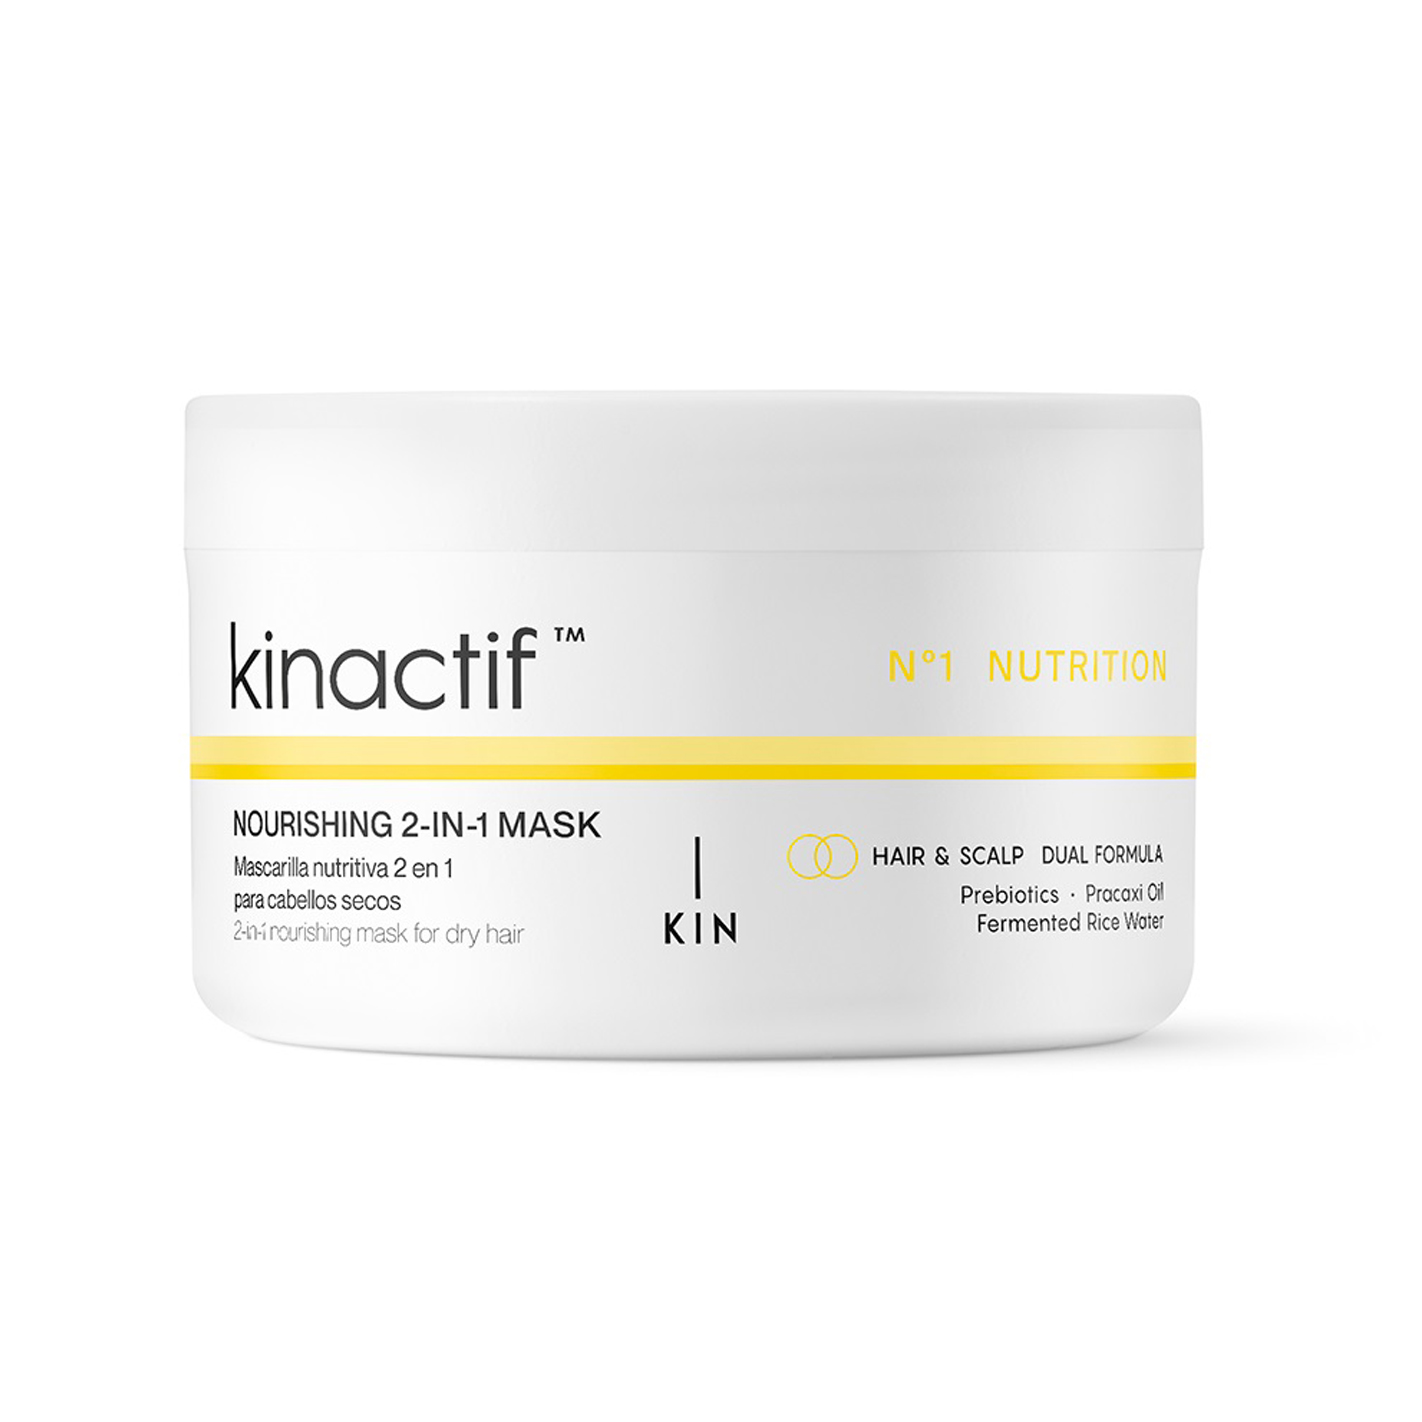 Kin - Kin Kinactif Nº1 Nutrition Nourishing 2-IN-1 Mask 200 Ml. Mascarilla nutritiva 2 en 1 para cabellos secos.